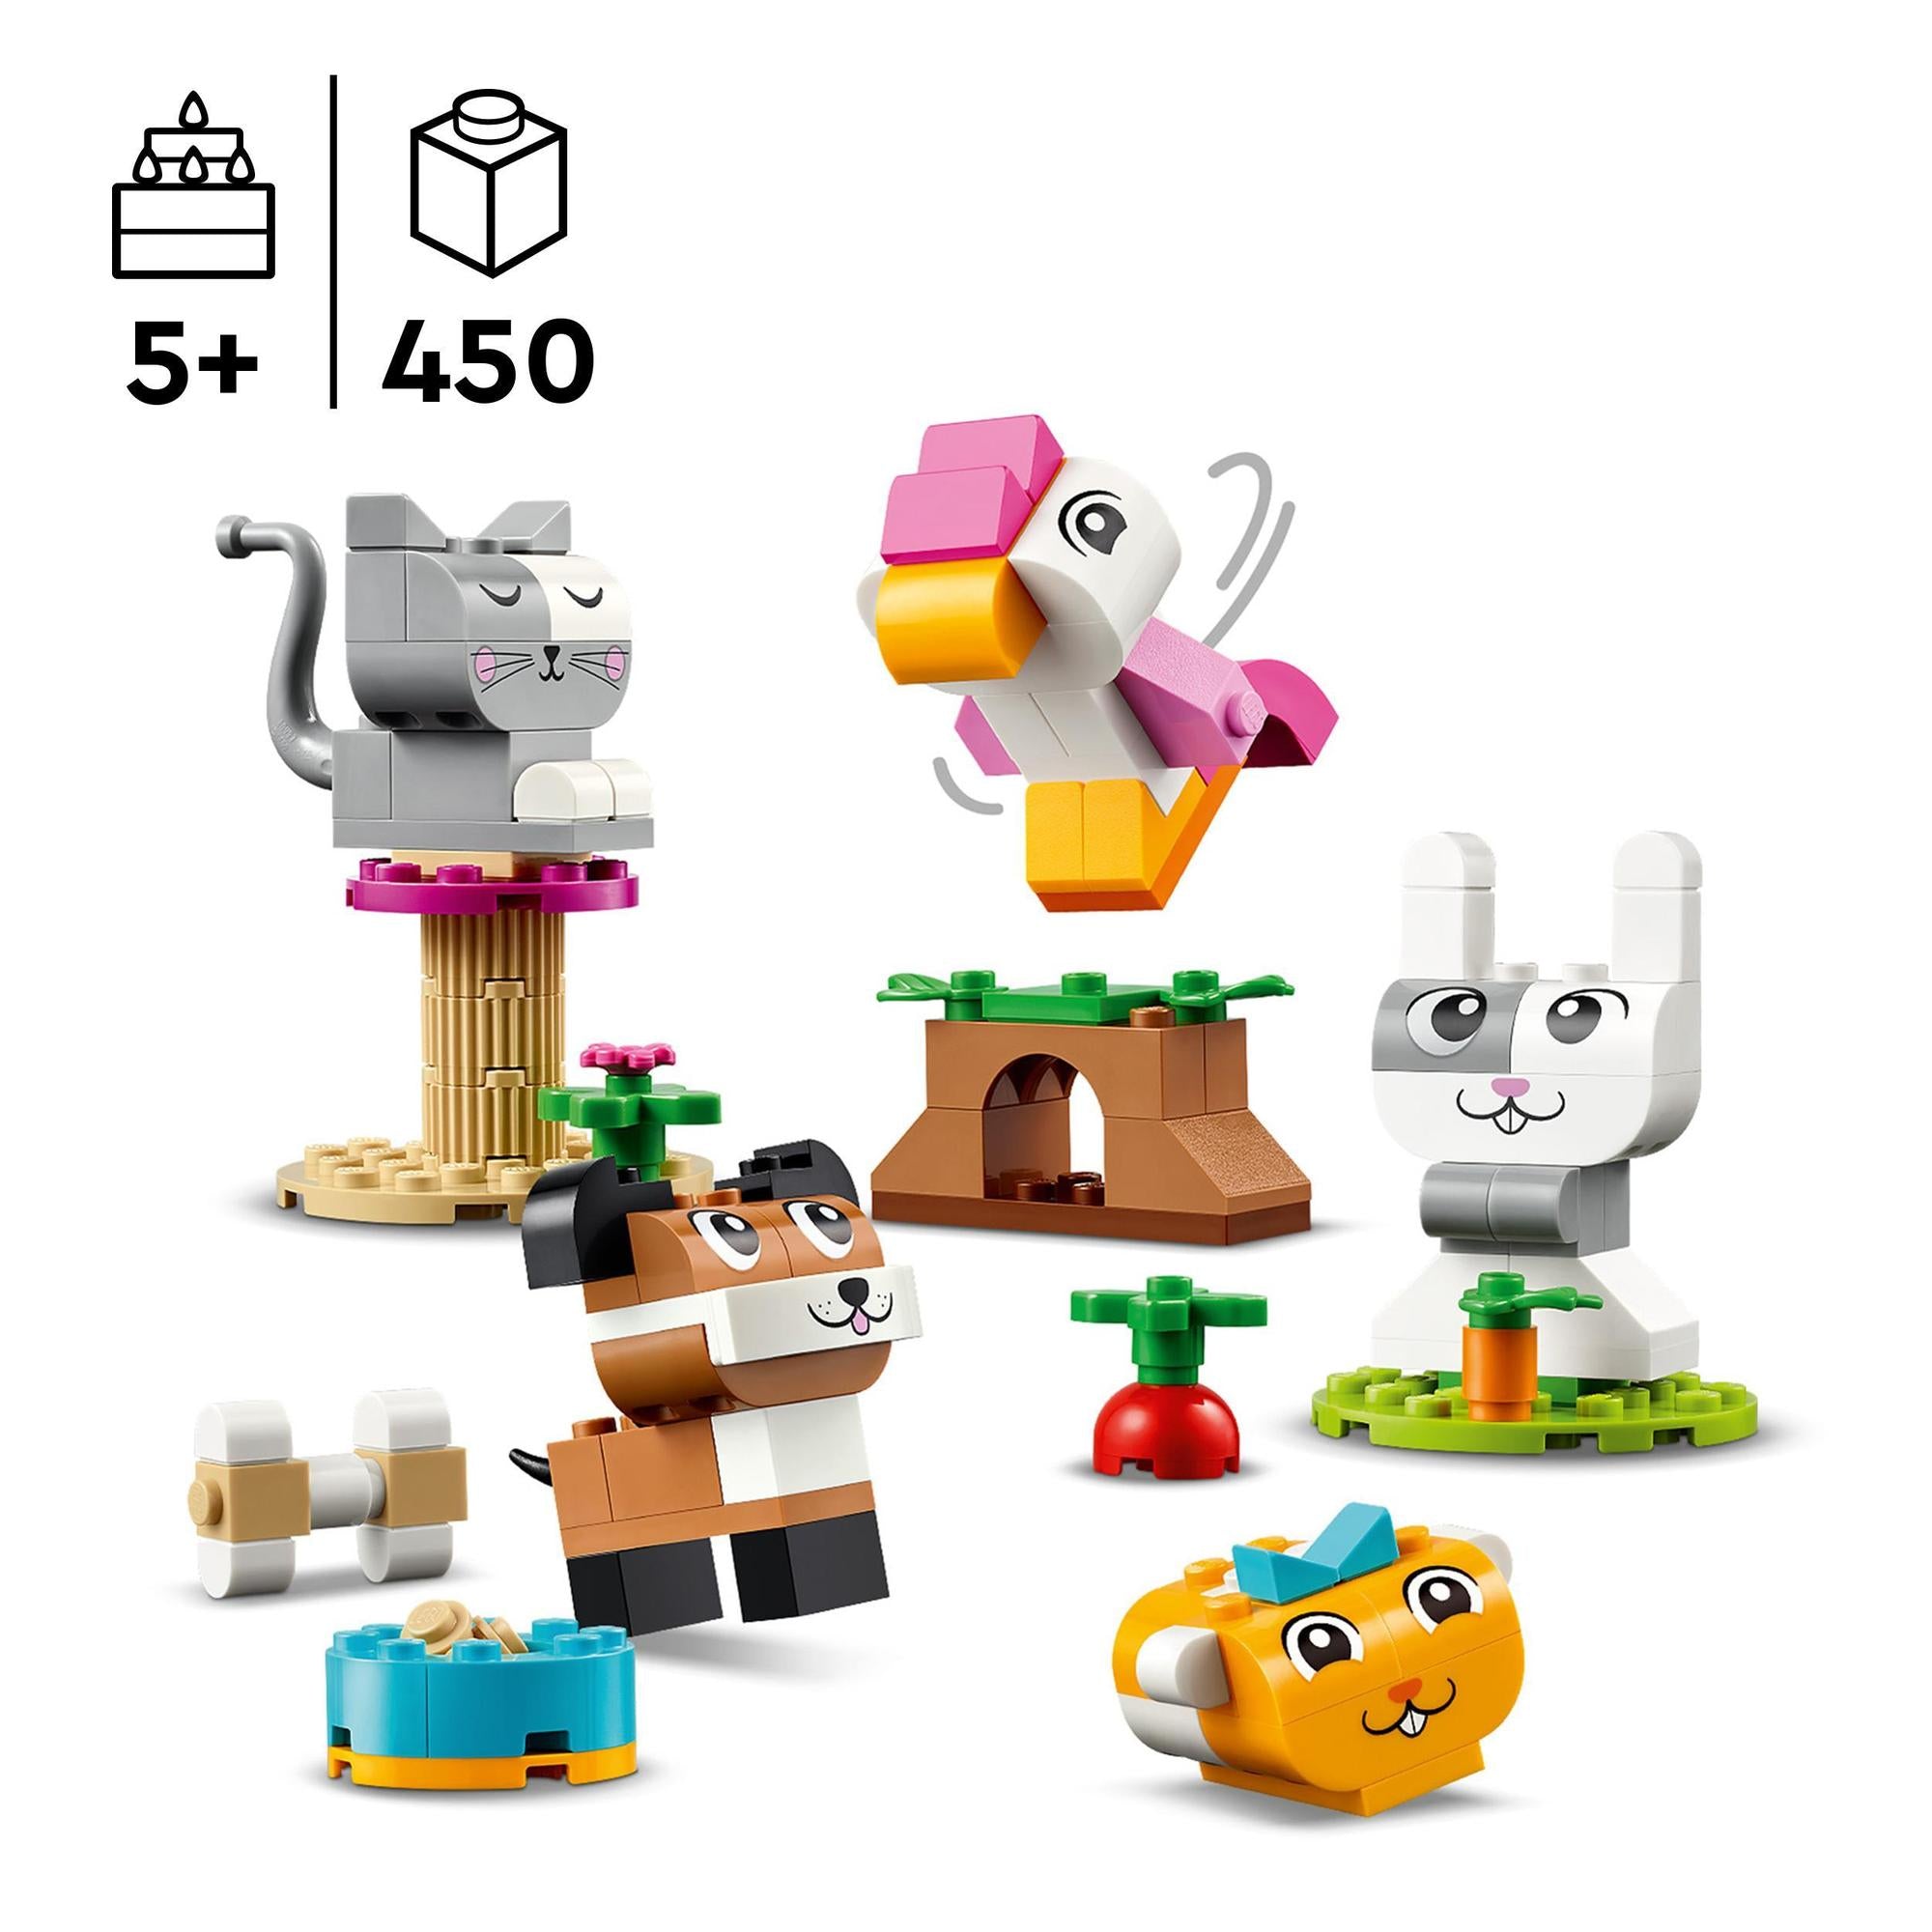 LEGO® | 11034 | Kreative Tiere